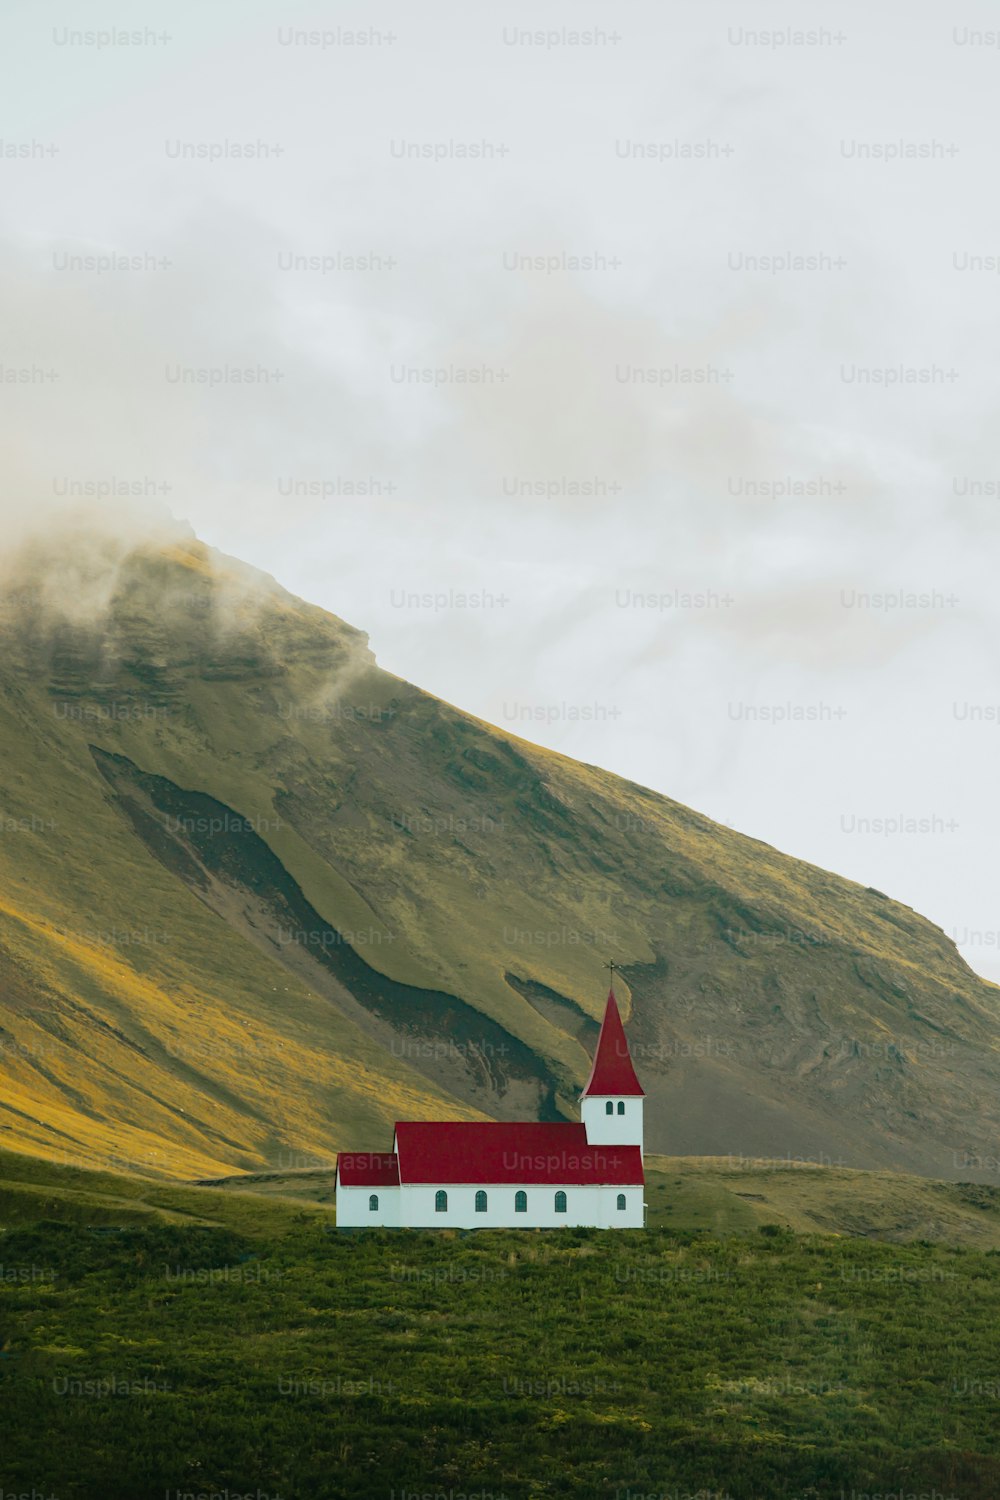 Una chiesa rossa e bianca su una collina verde